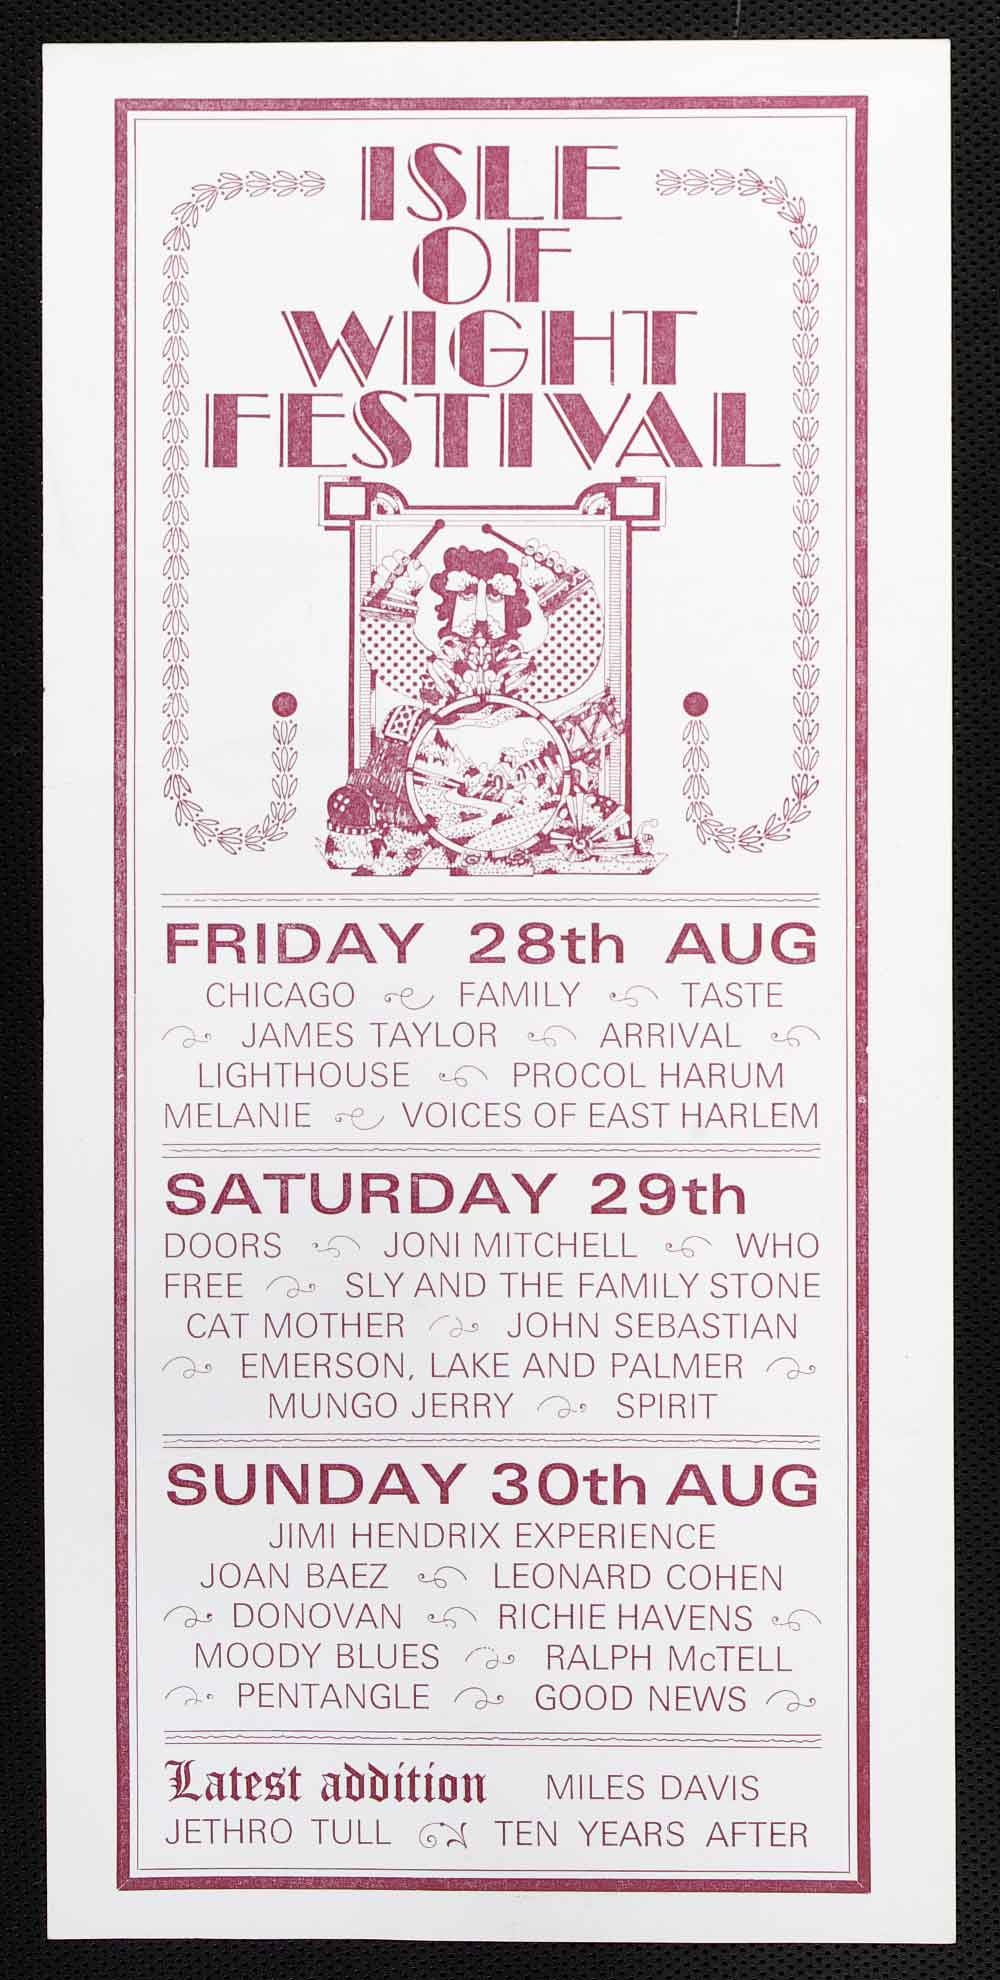 Isle of Wight Festival schedule